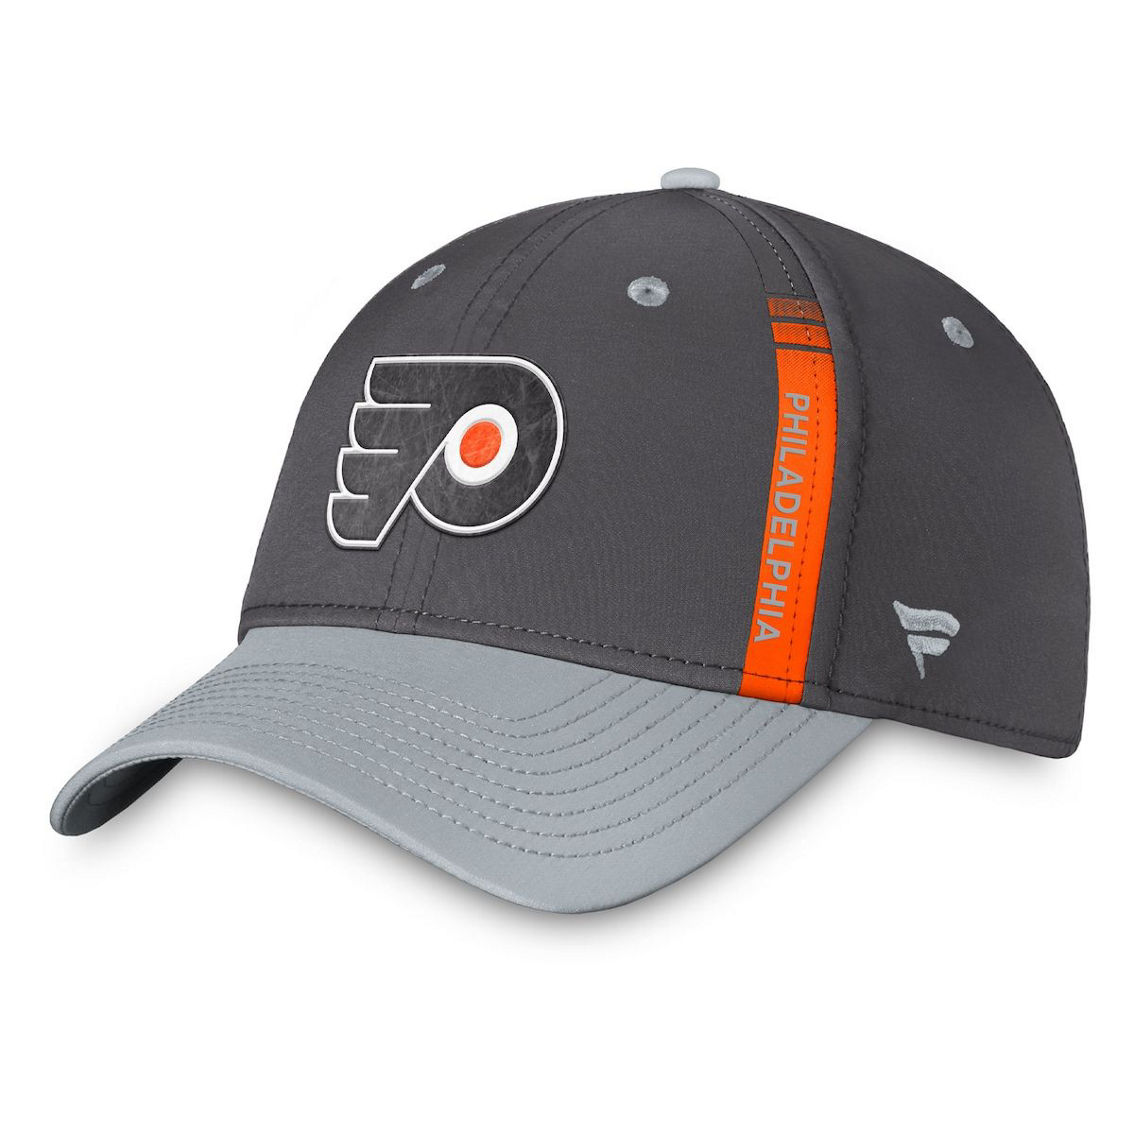 Fanatics Branded Men's Charcoal/Gray Philadelphia Flyers Authentic Pro Home Ice Flex Hat